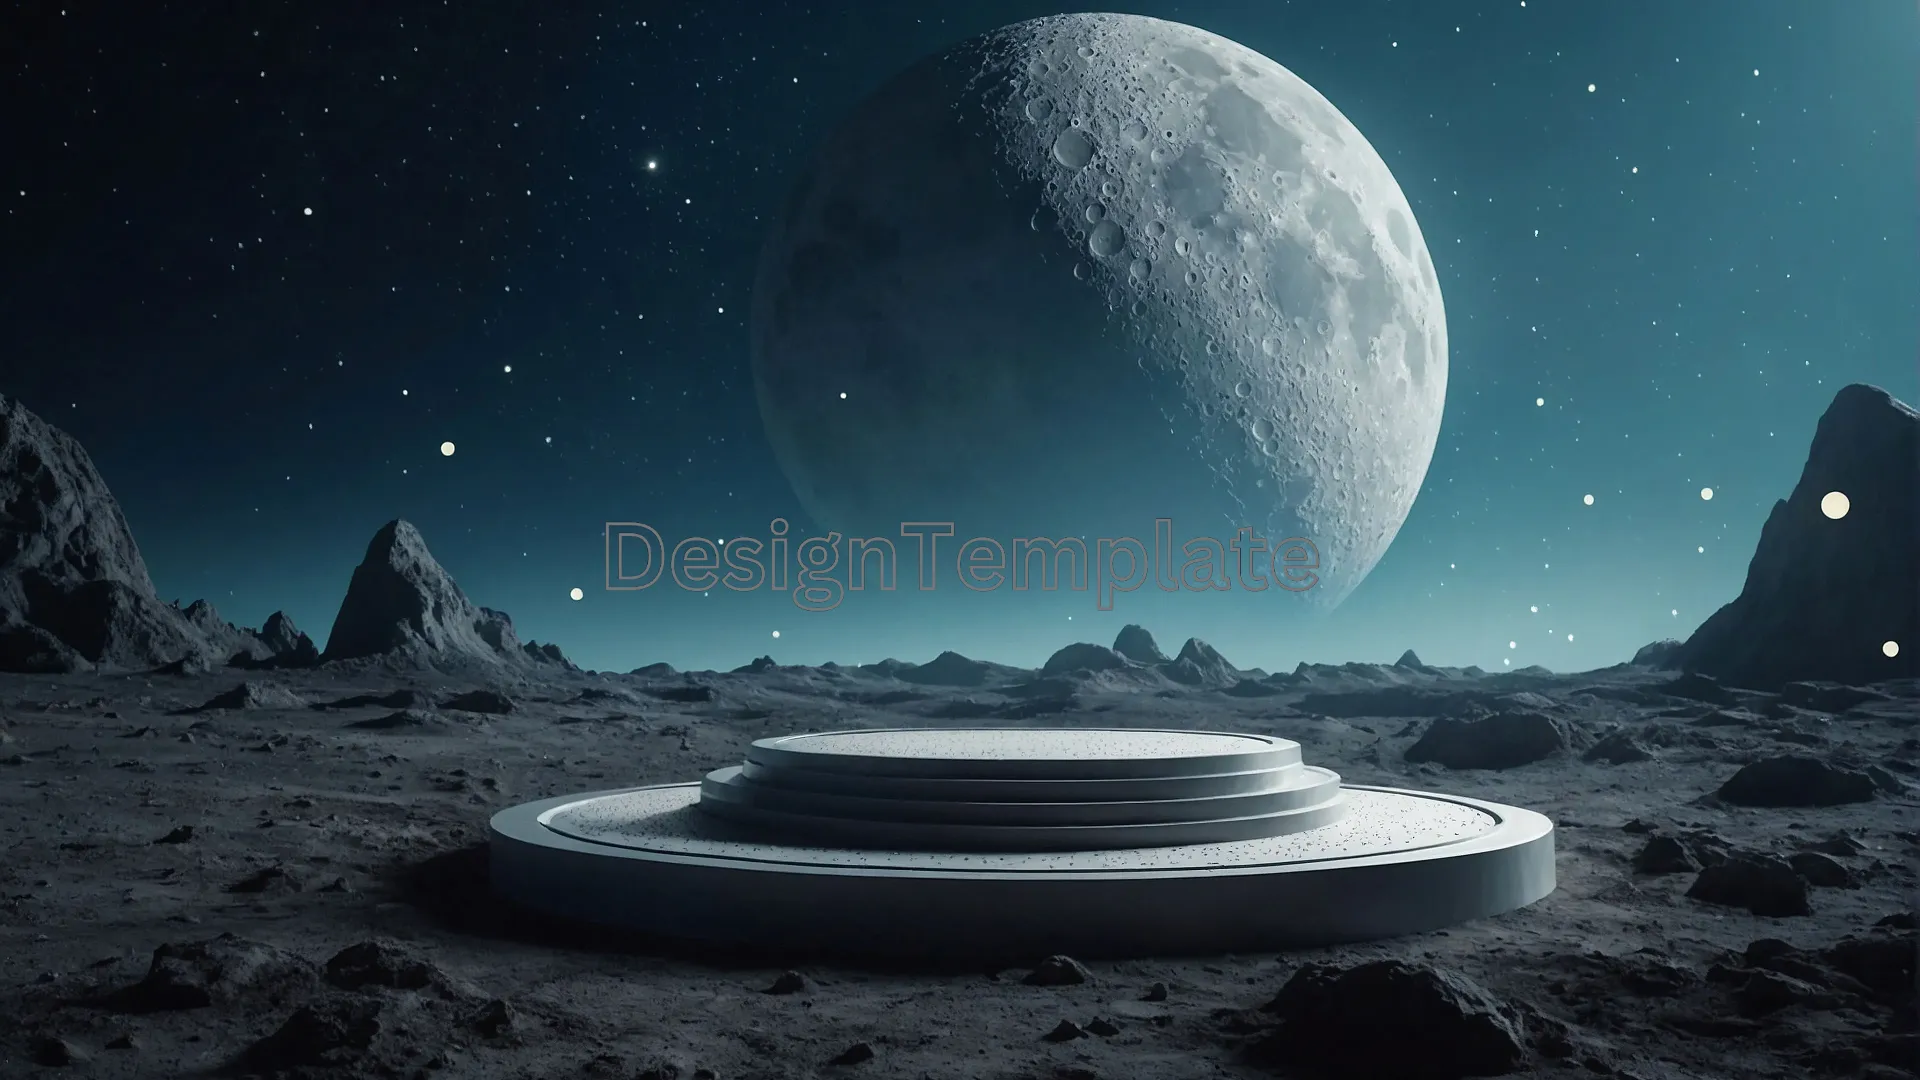 Calm Moonlit Night on Alien Planet Background Texture